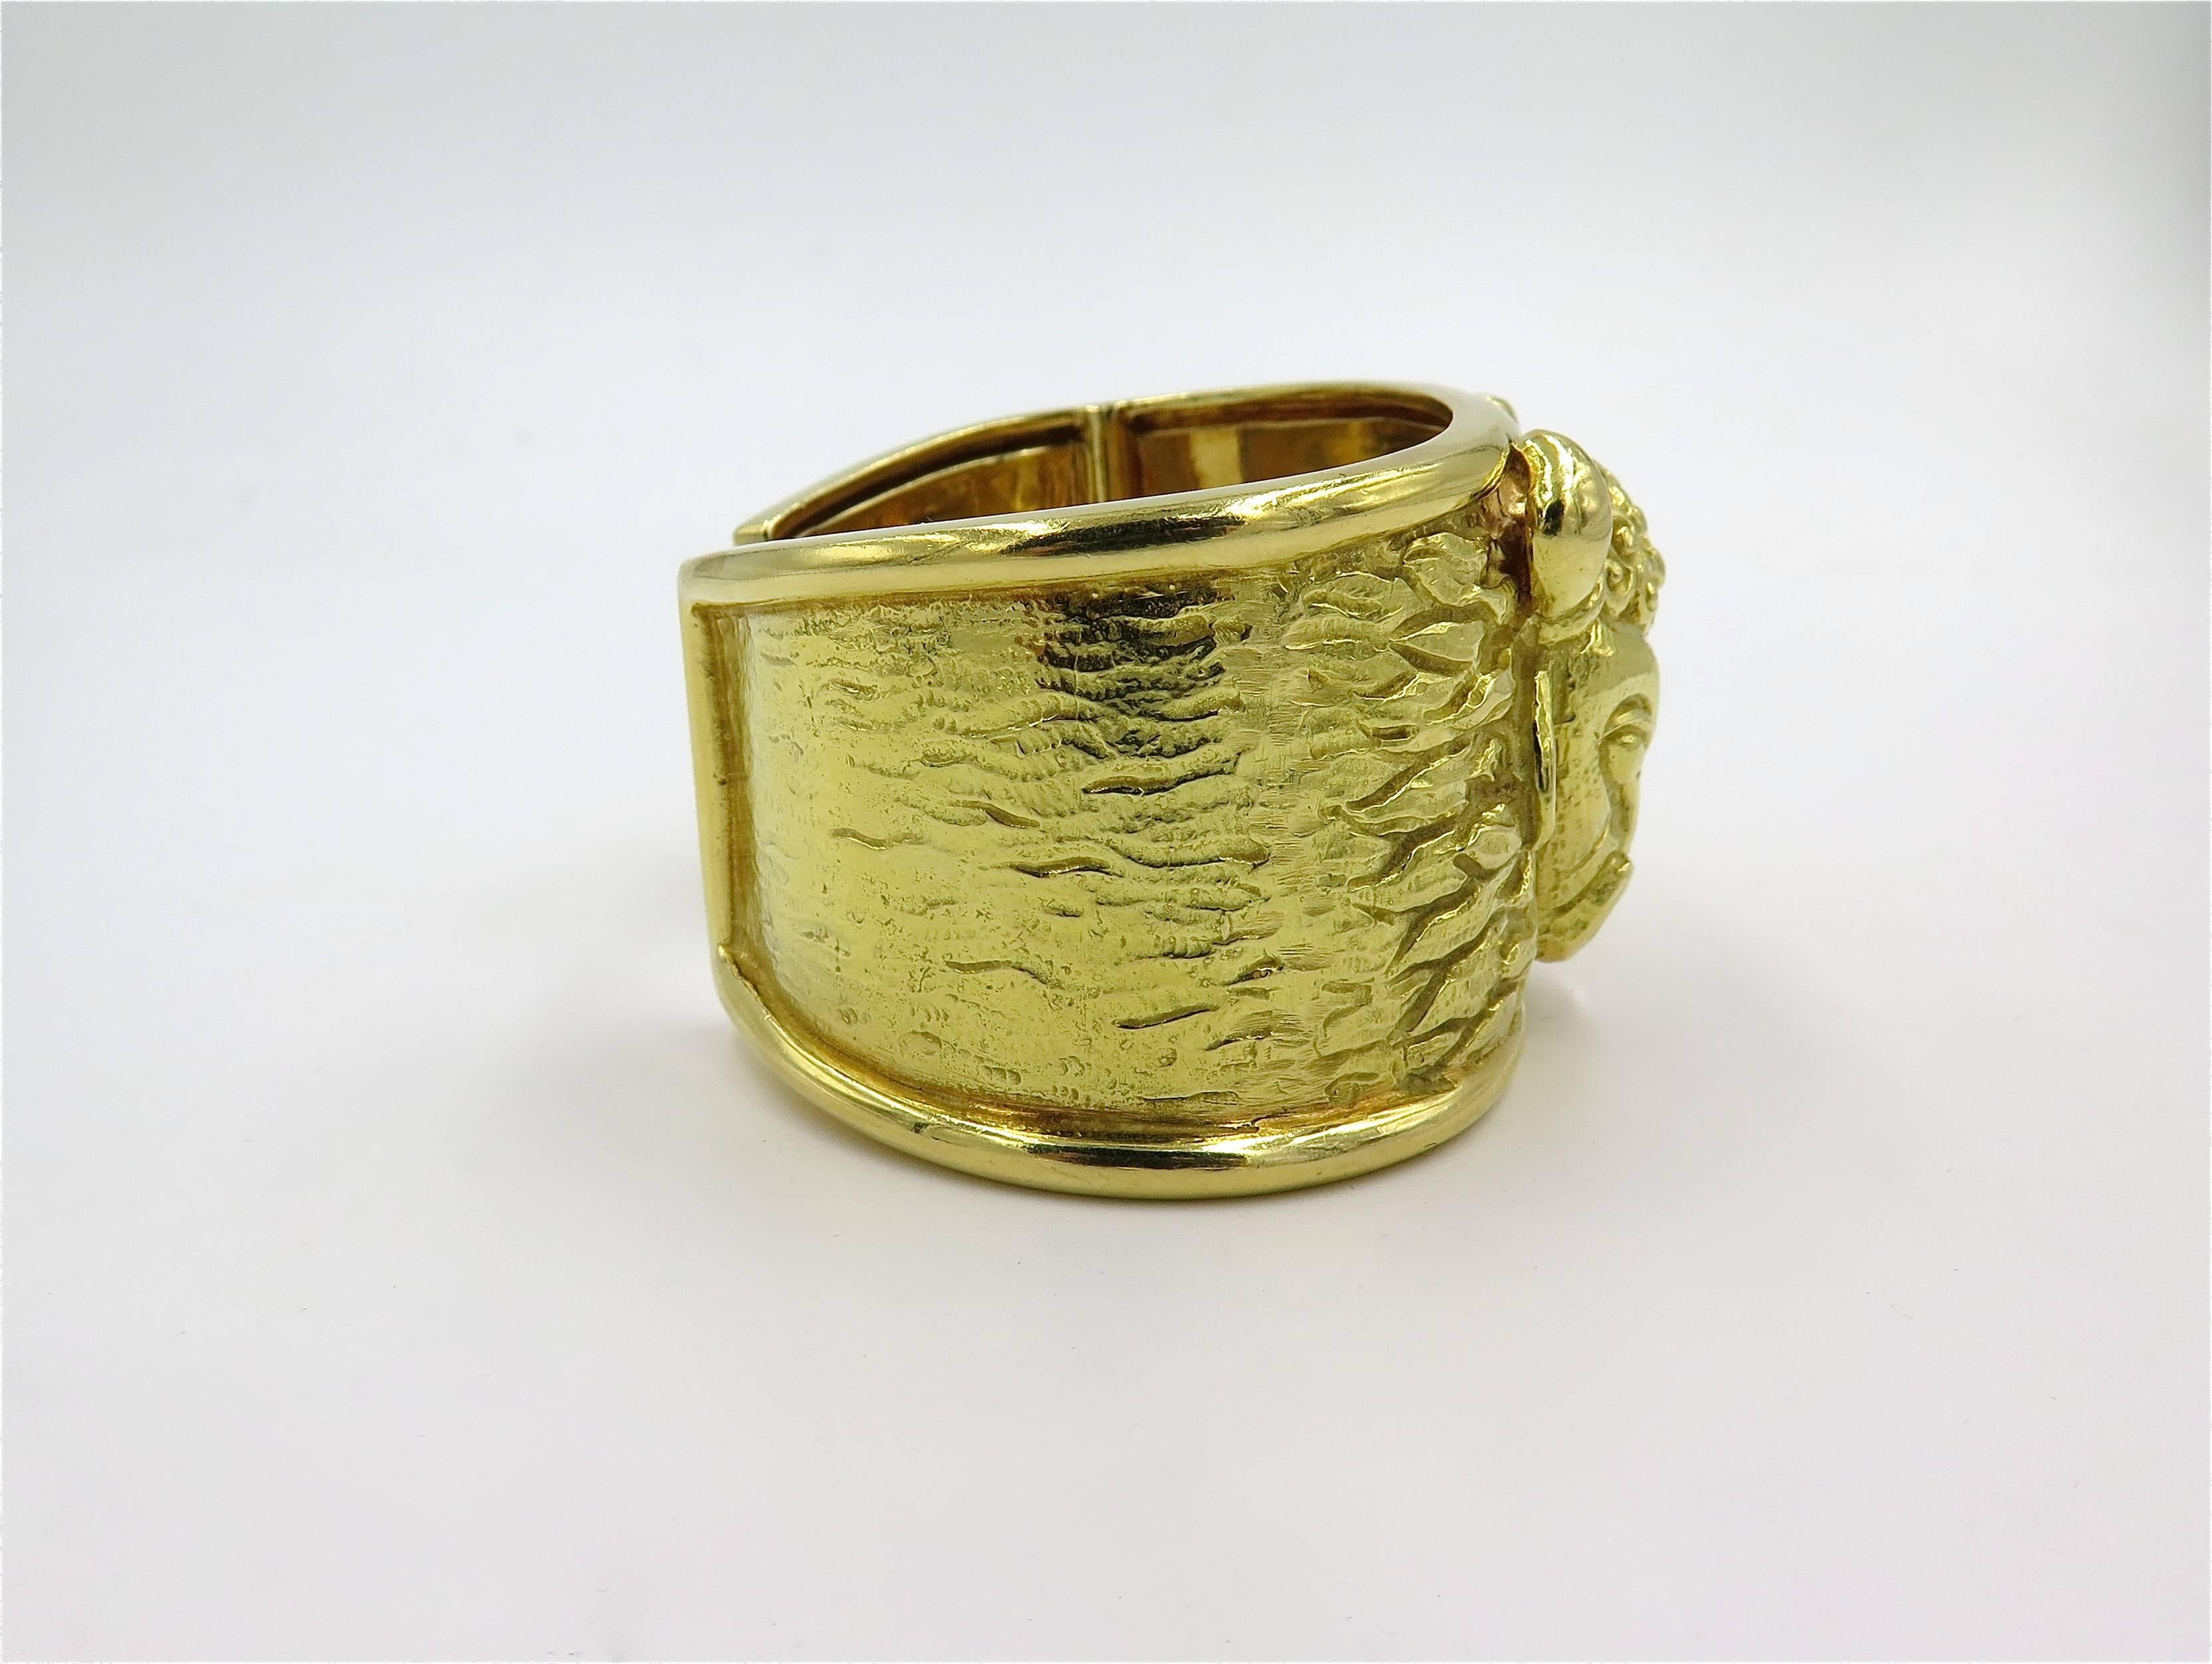 An 18 karat yellow gold cuff bracelet.  David Webb. Designed as a wide textured hinged cuff, centering a bull’s head. Width of bracelet is approximately 1 1/2 inches, inside measurement is approximately 6 1/4 inches, diameter is approximately 2 1/4